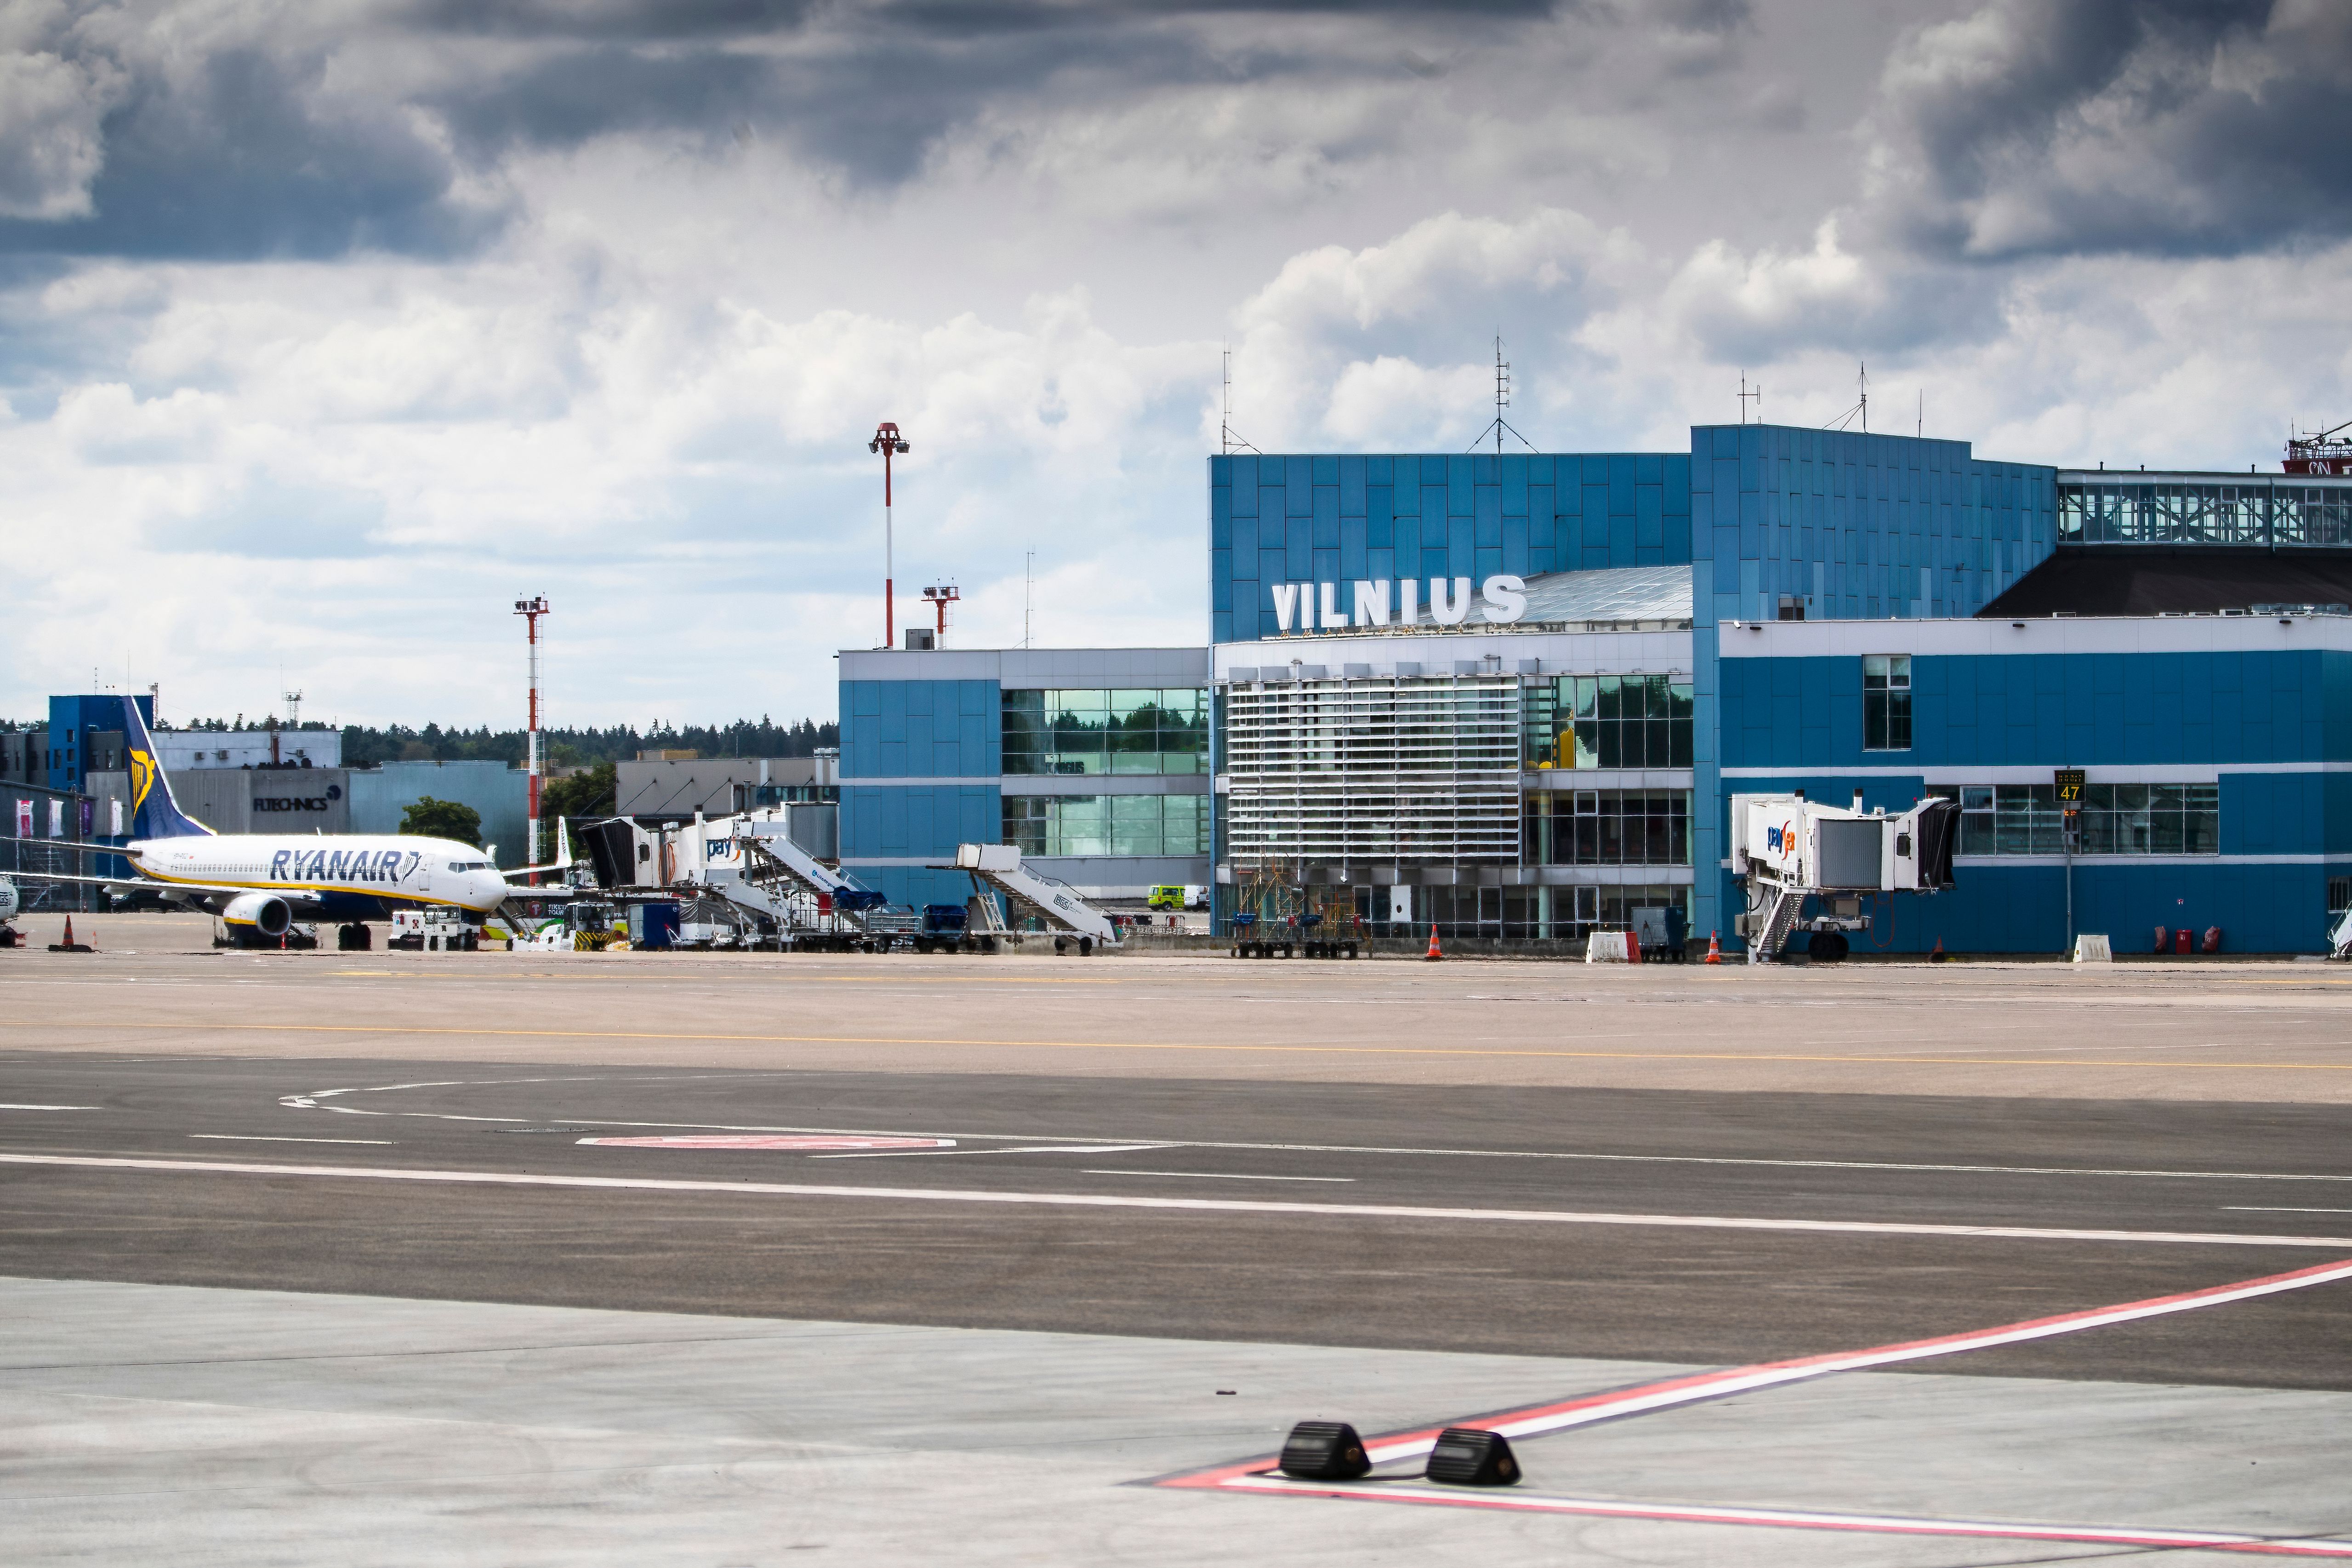 A Ryanair aircraft taxiing near the Vilnius Airport terminal building.